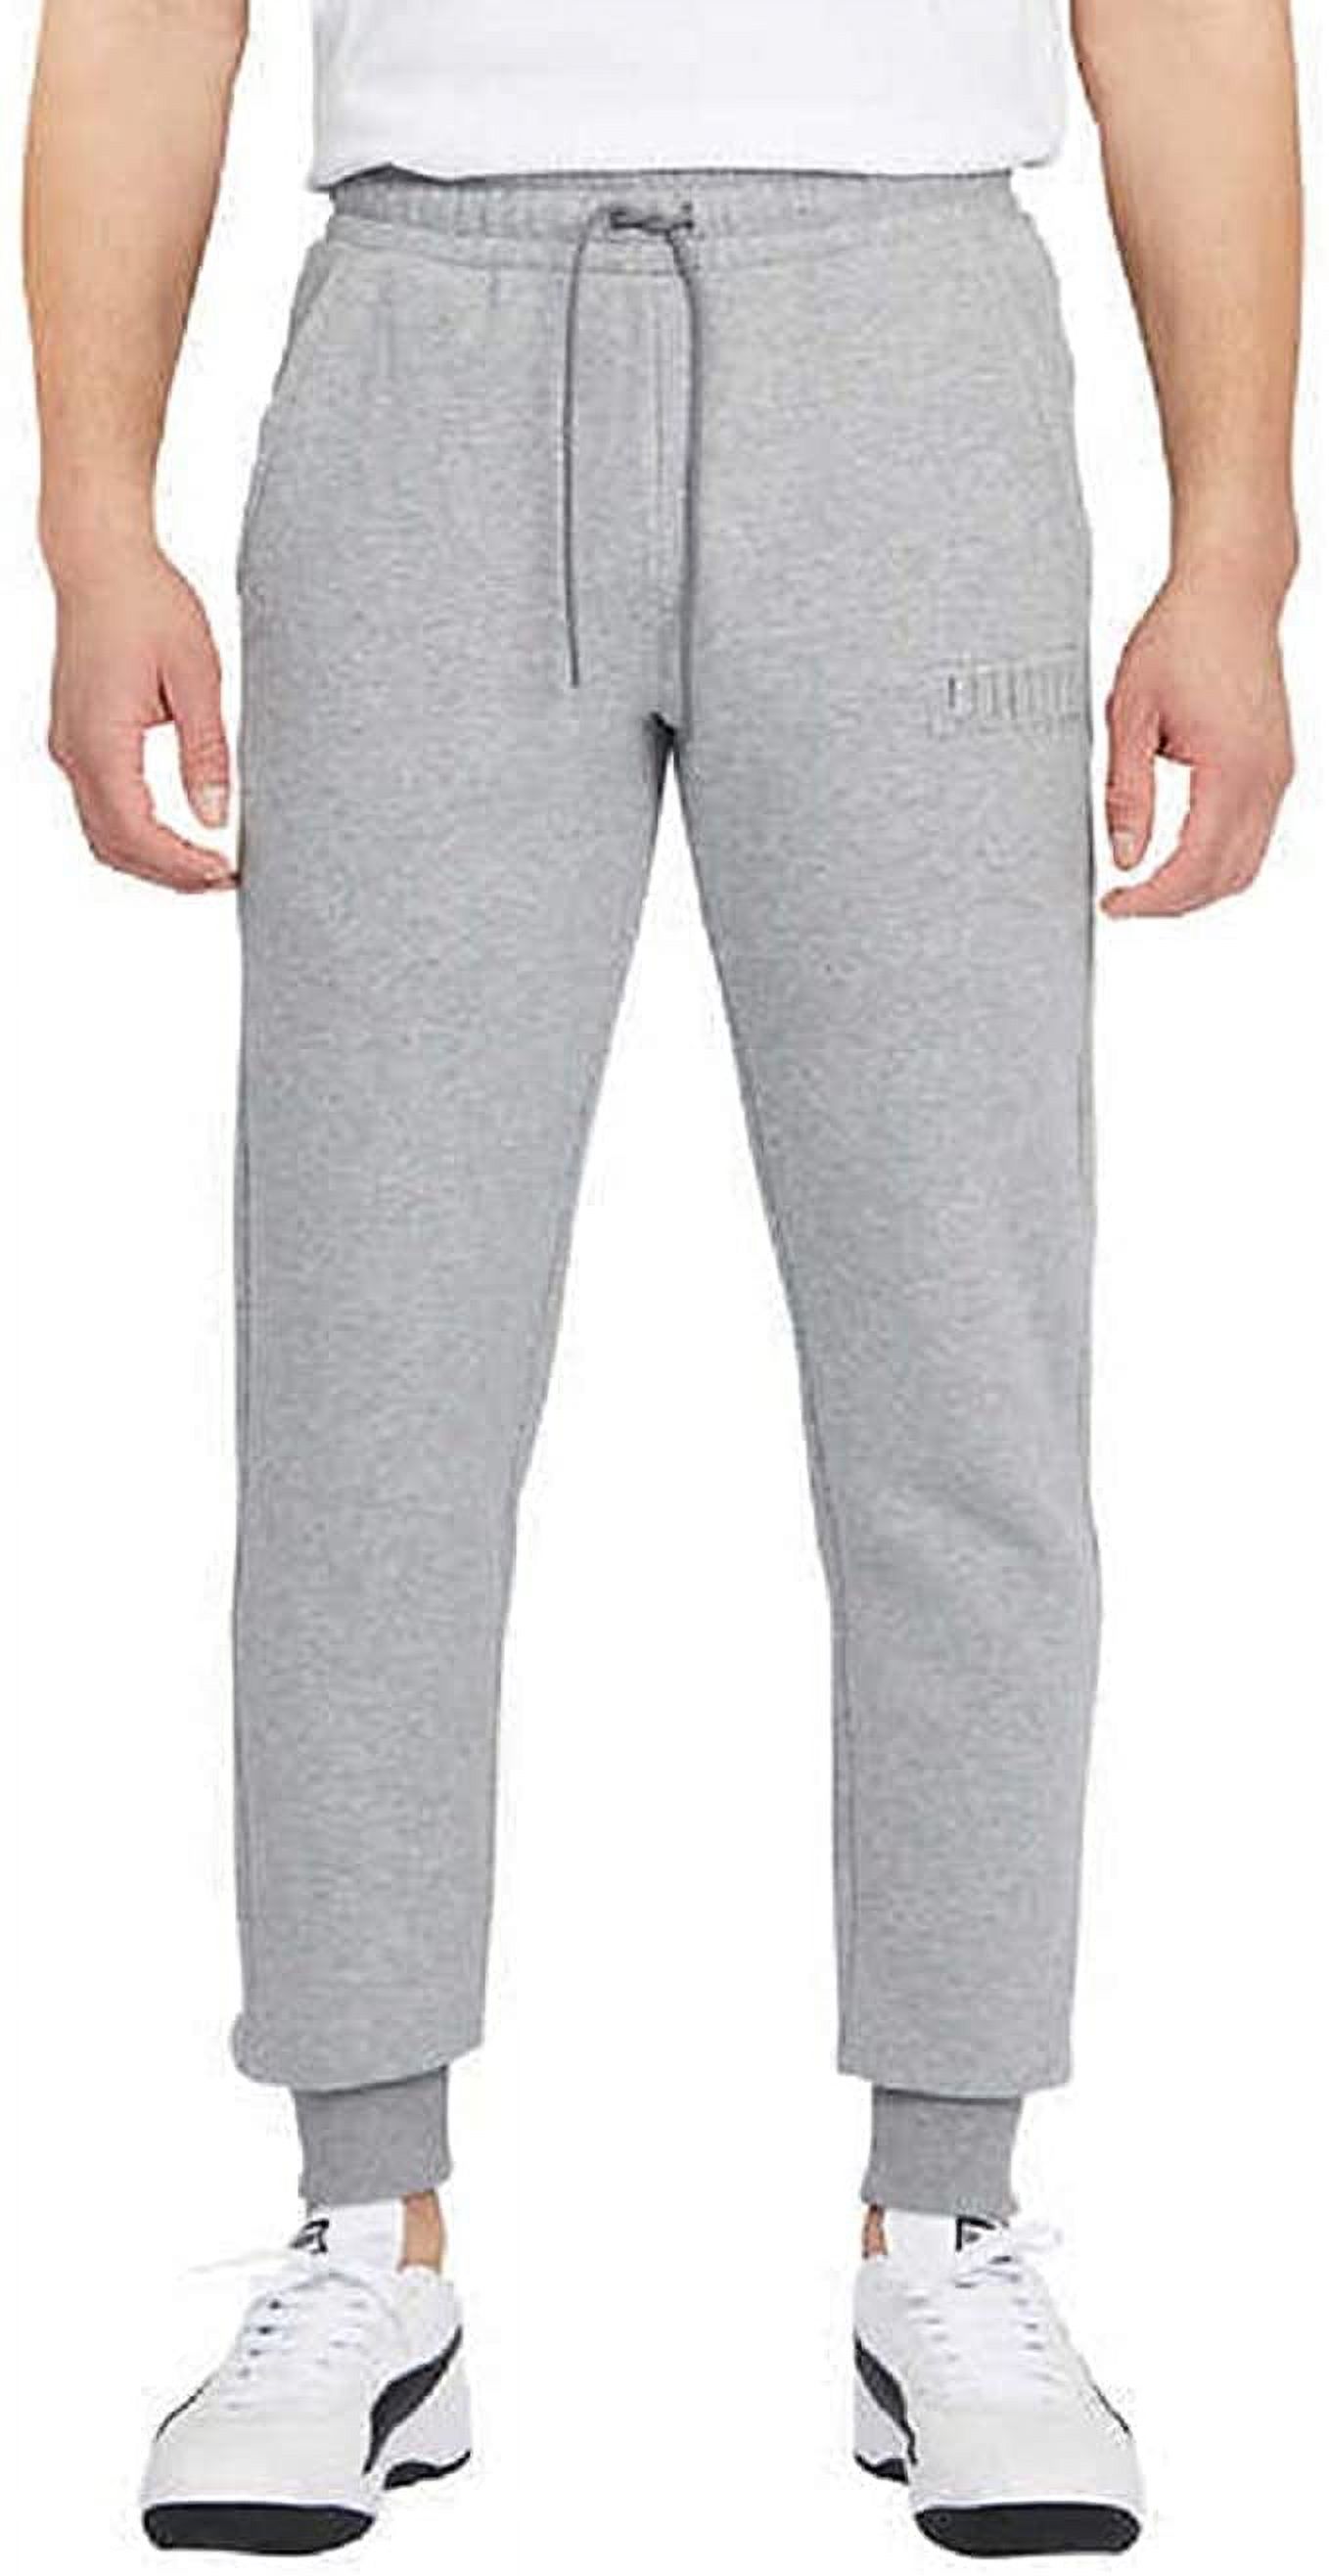 PUMA Men's Embossed Logo Fleece Jogger Pants Sweatpants, Gray Heather Medium - image 1 of 2